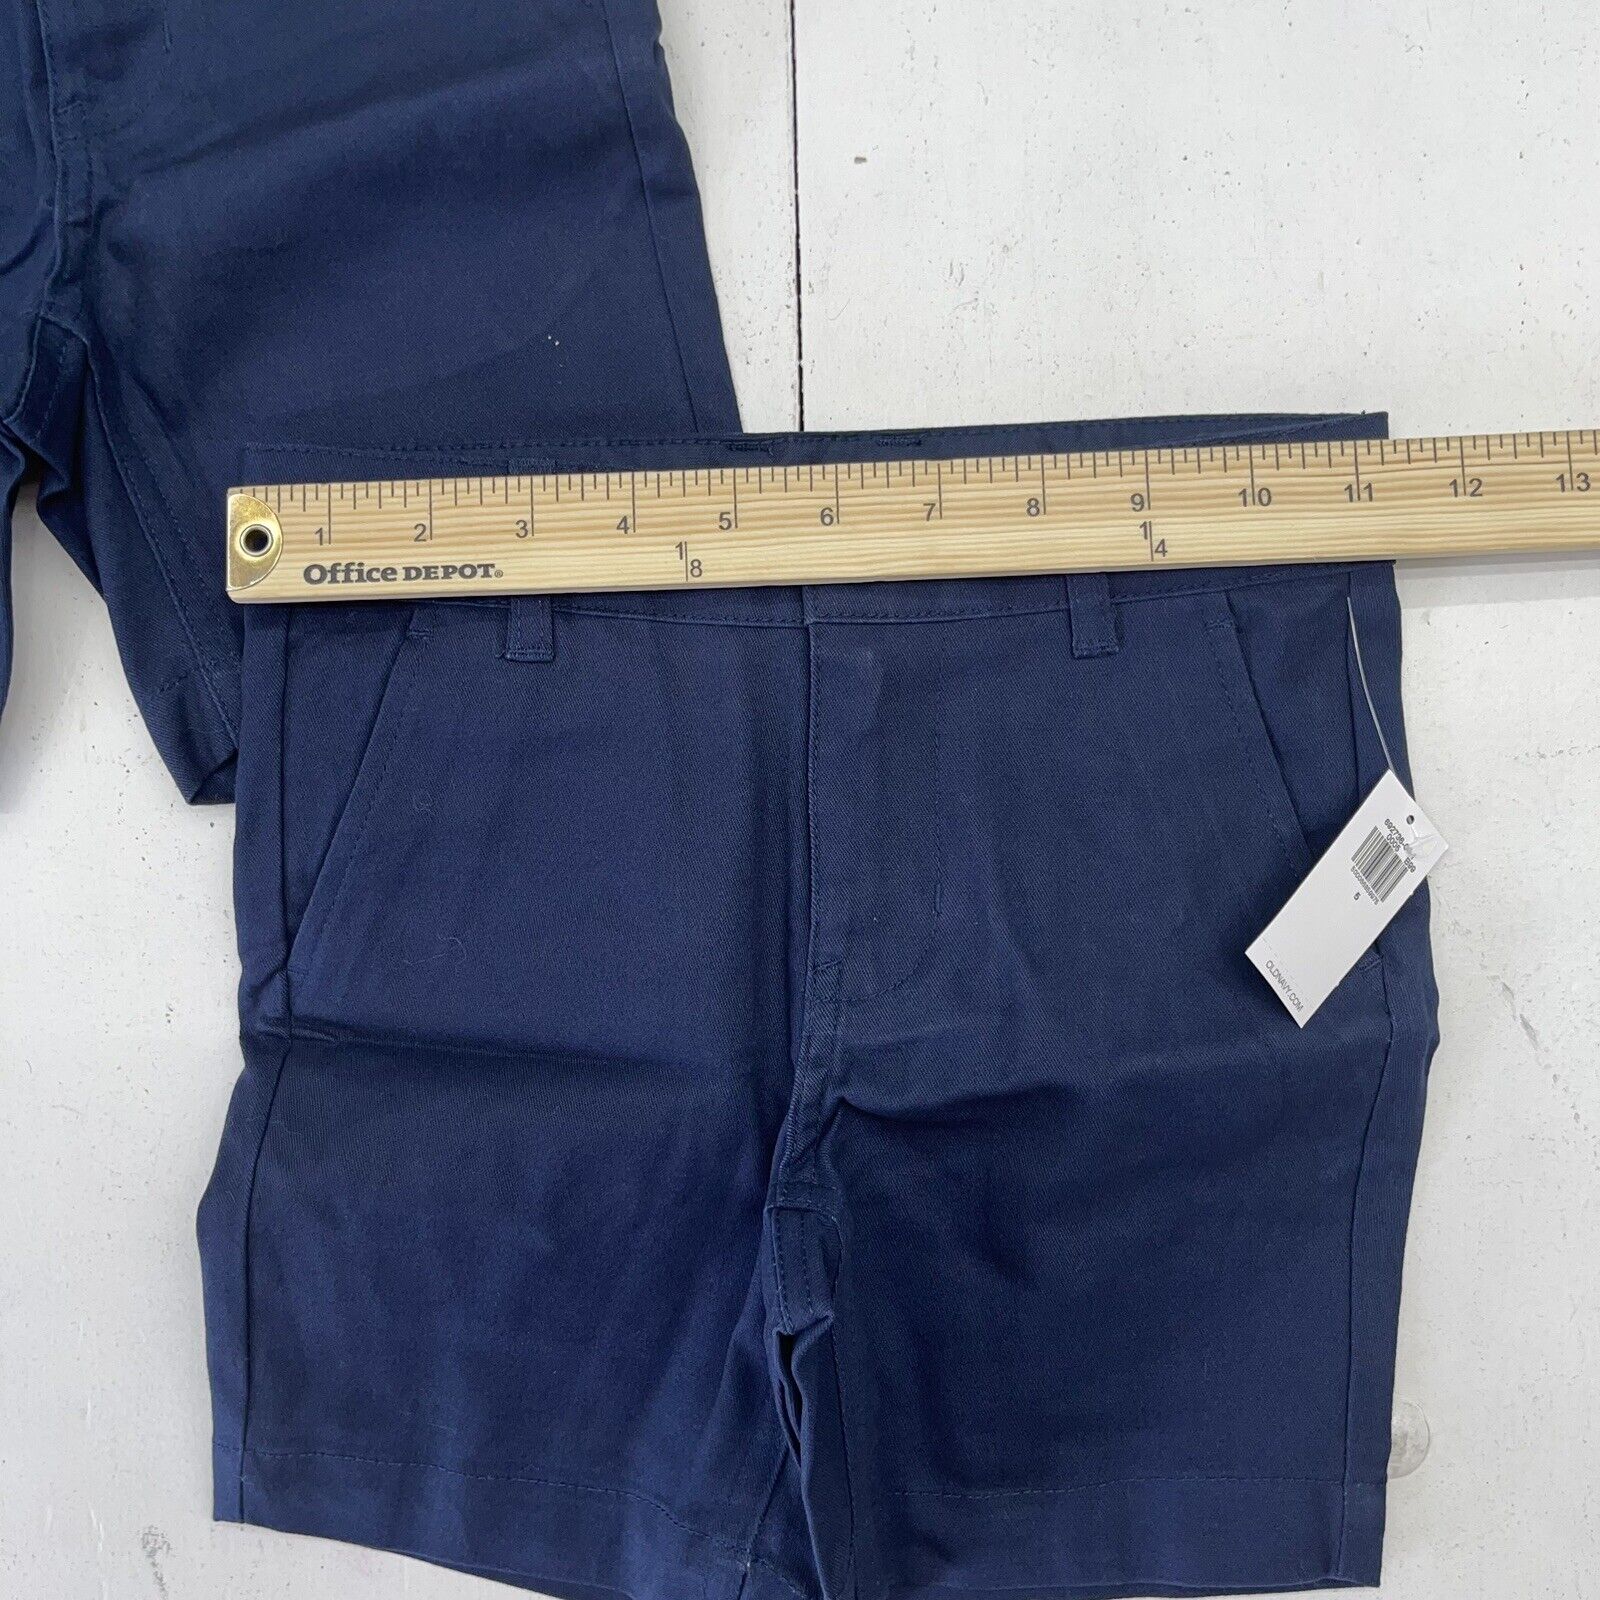 Old Navy Blue Built In Flex Twill Straight Shorts Boys Size 8 Slim NEW -  beyond exchange